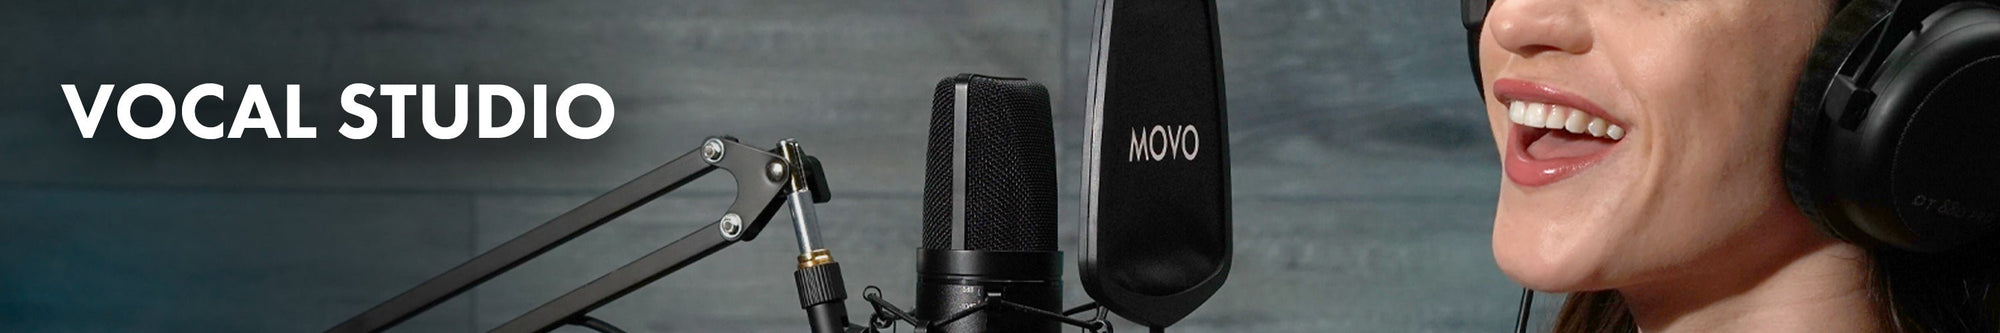 Vocal & Studio Microphones - Movo